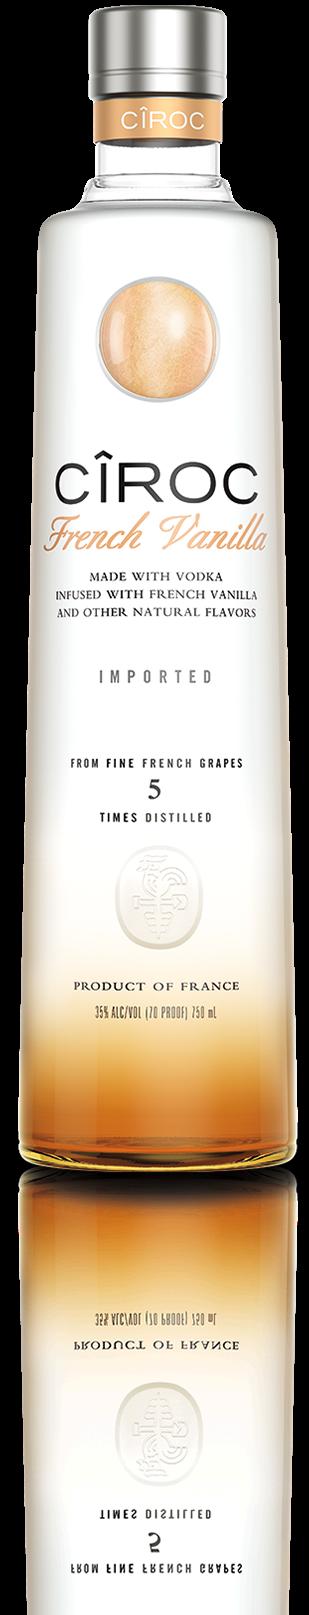 CÎROC French Vanilla CÎROC Vodka https://www.ciroc.